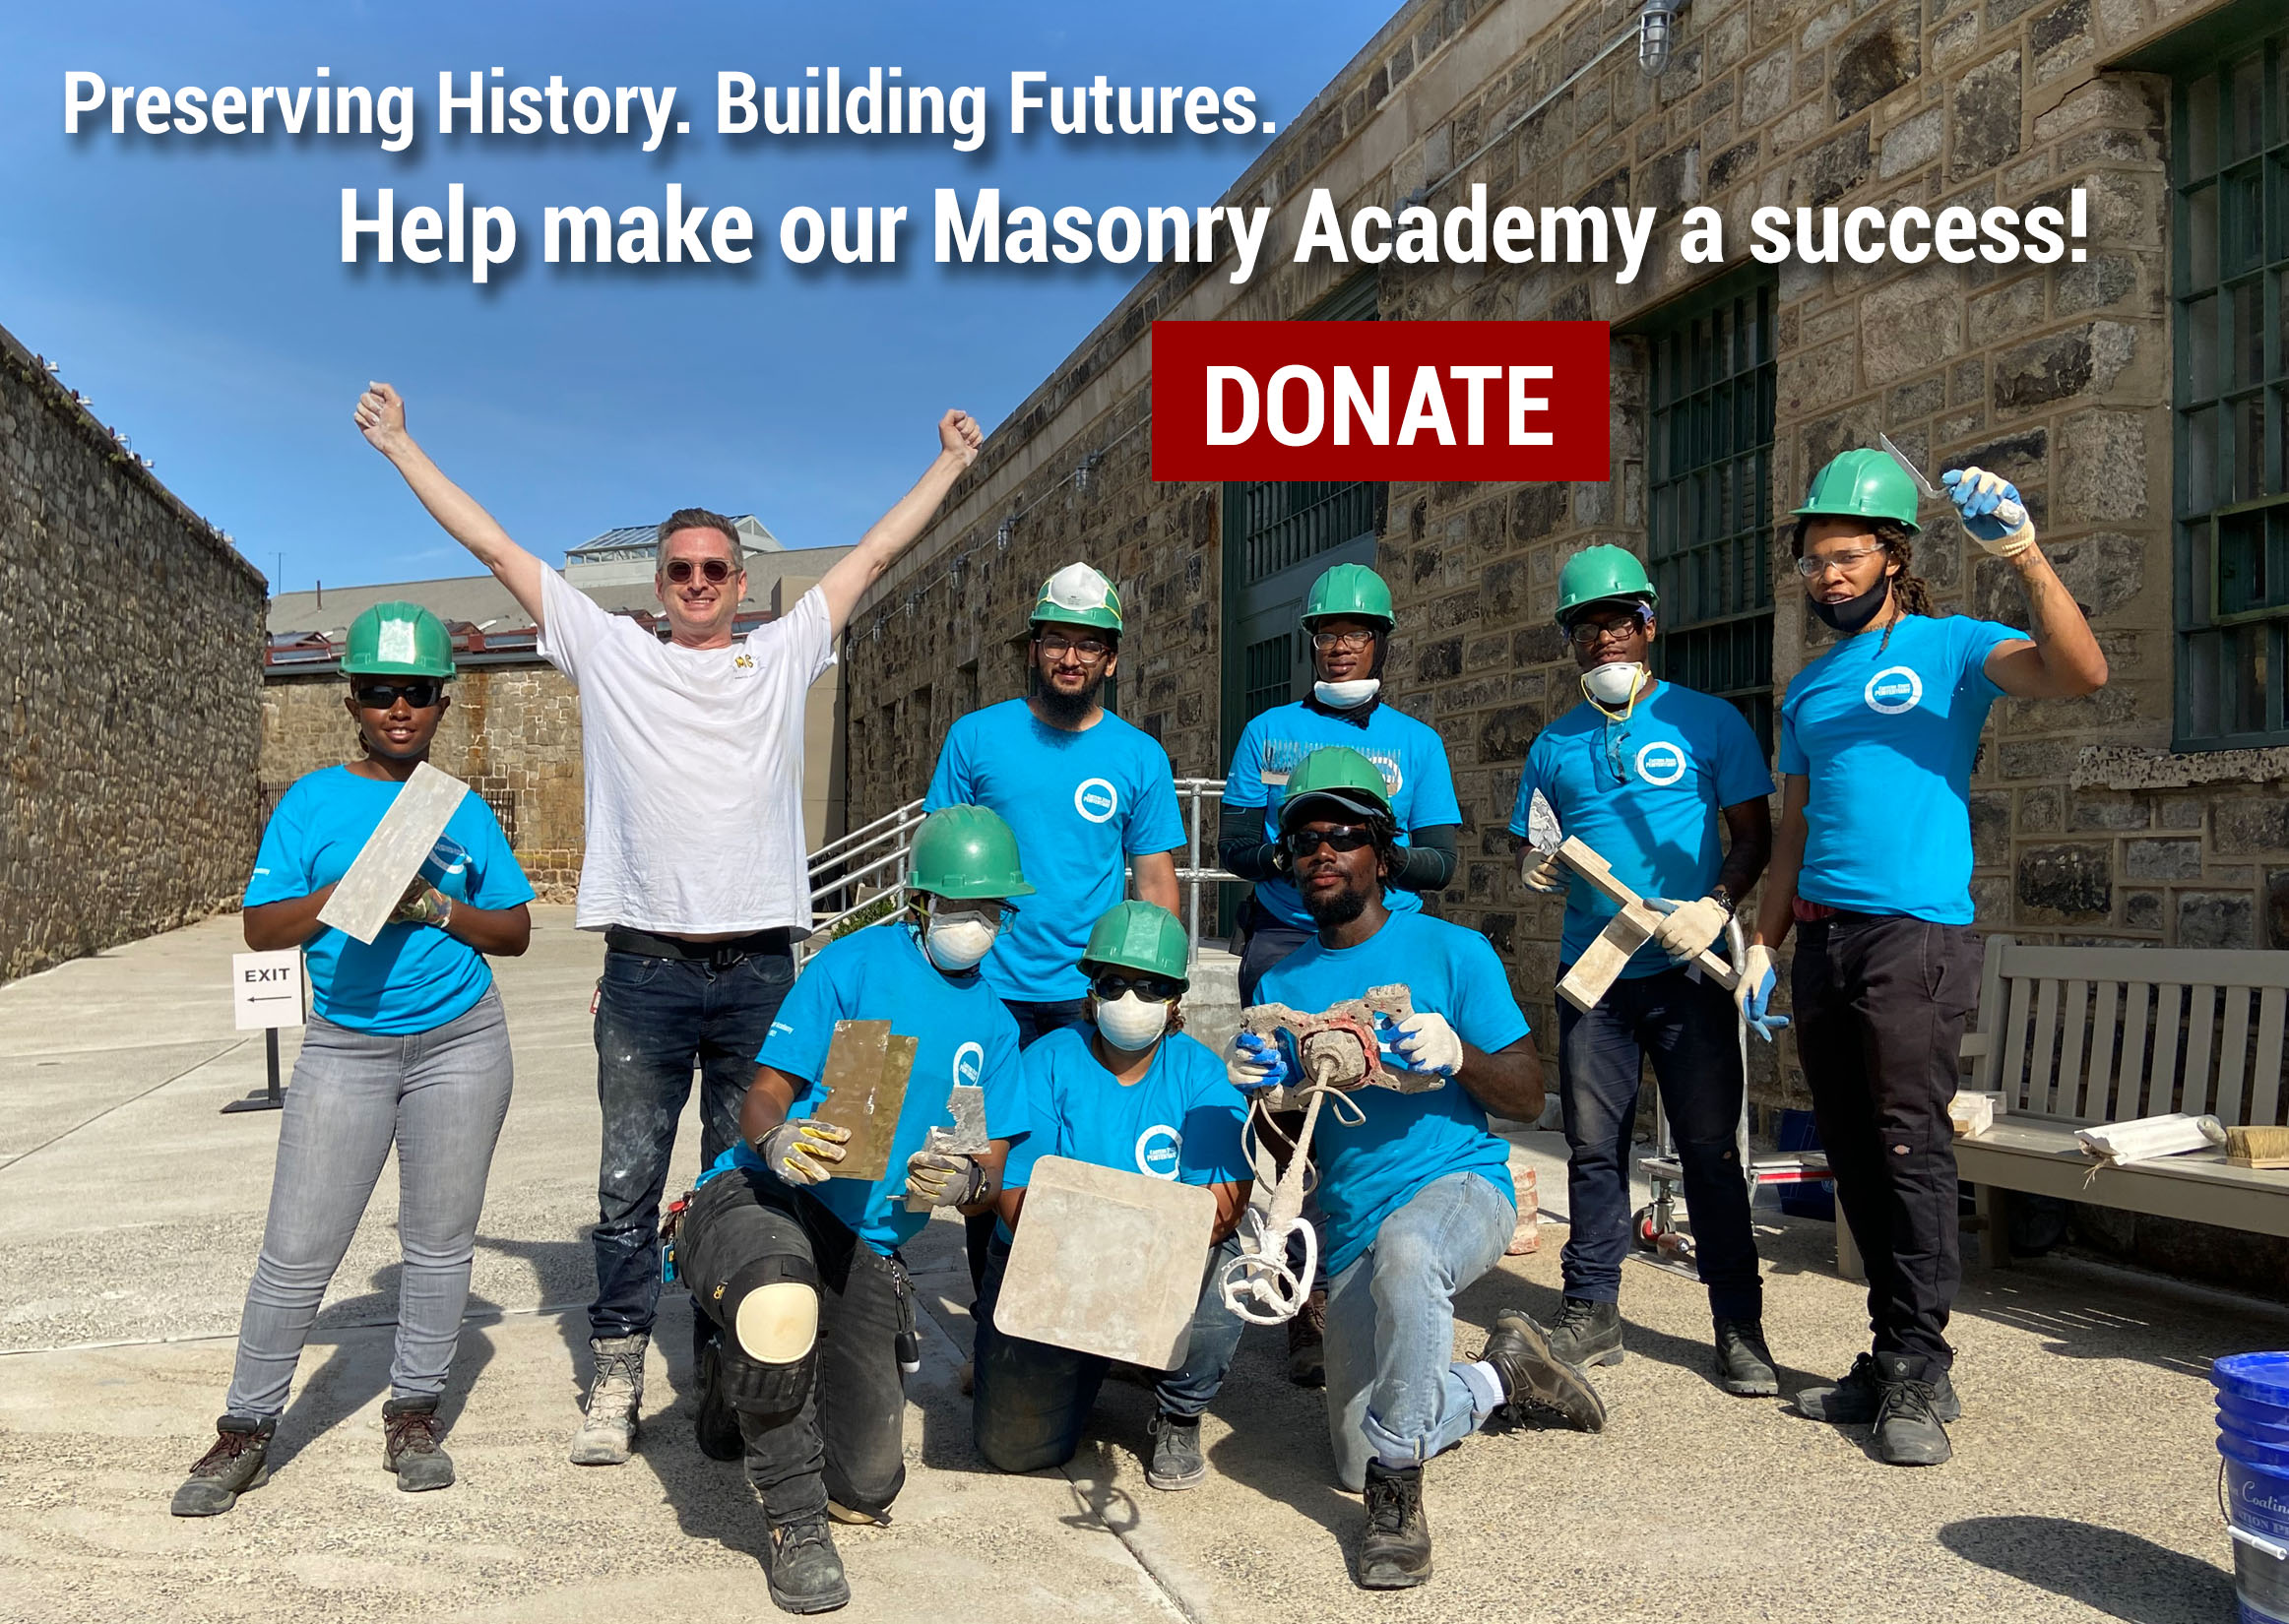 Help make our Masonry Academy a success! Donate now.